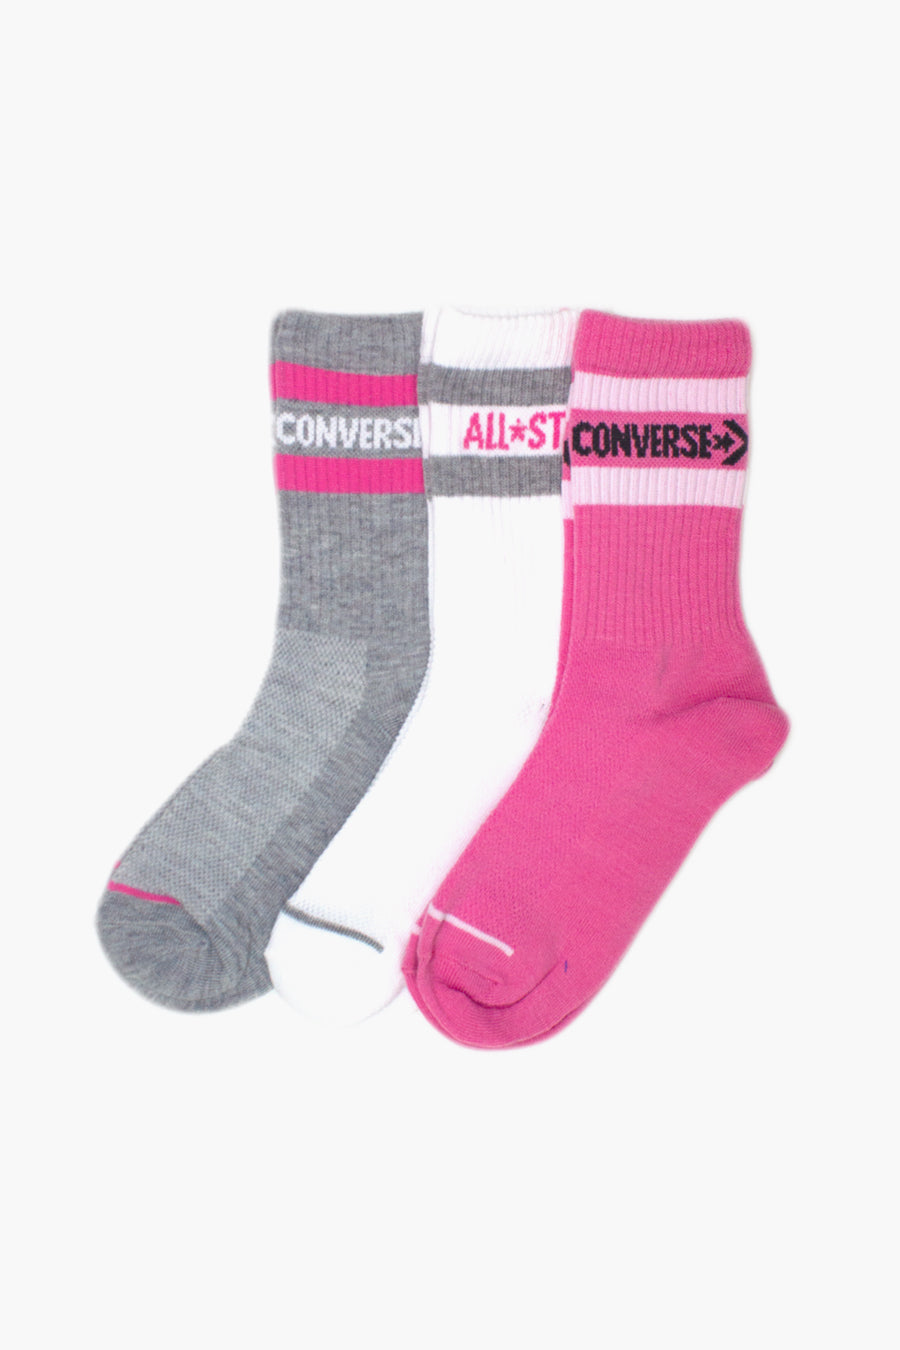 girls converse socks